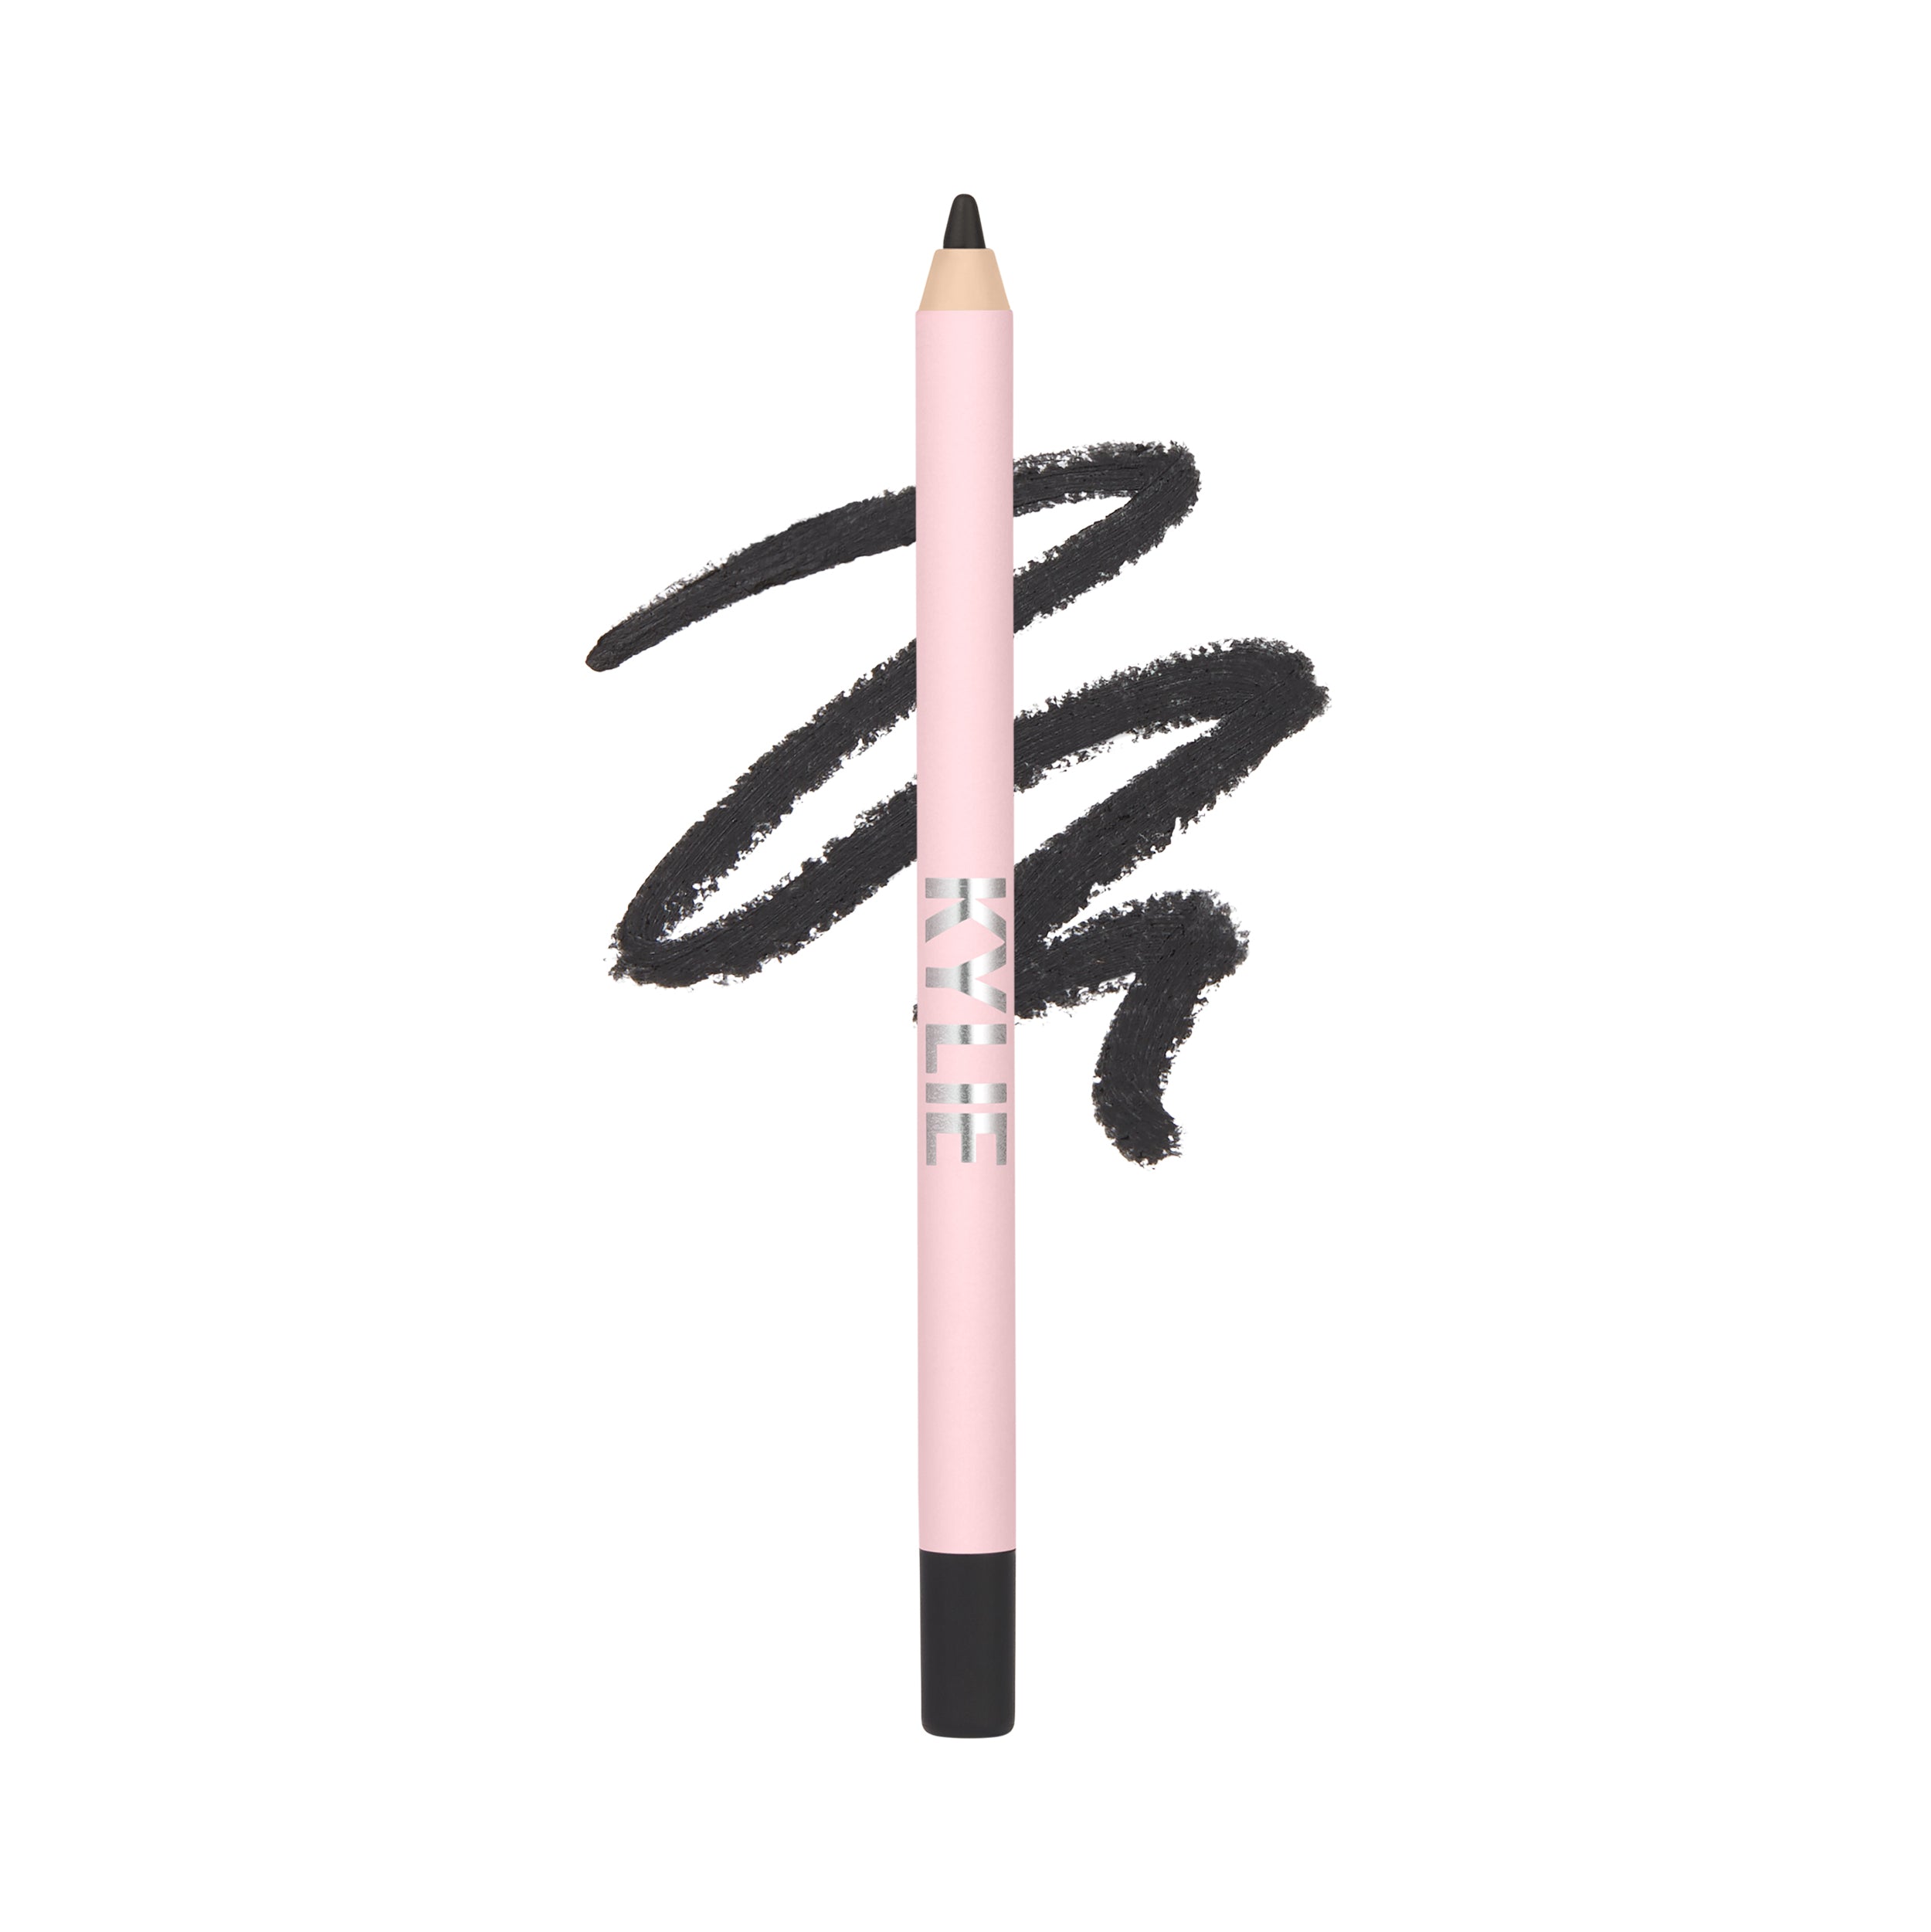 renæssance Marco Polo vækst Gel Eyeliner Pencil | Kylie Cosmetics by Kylie Jenner